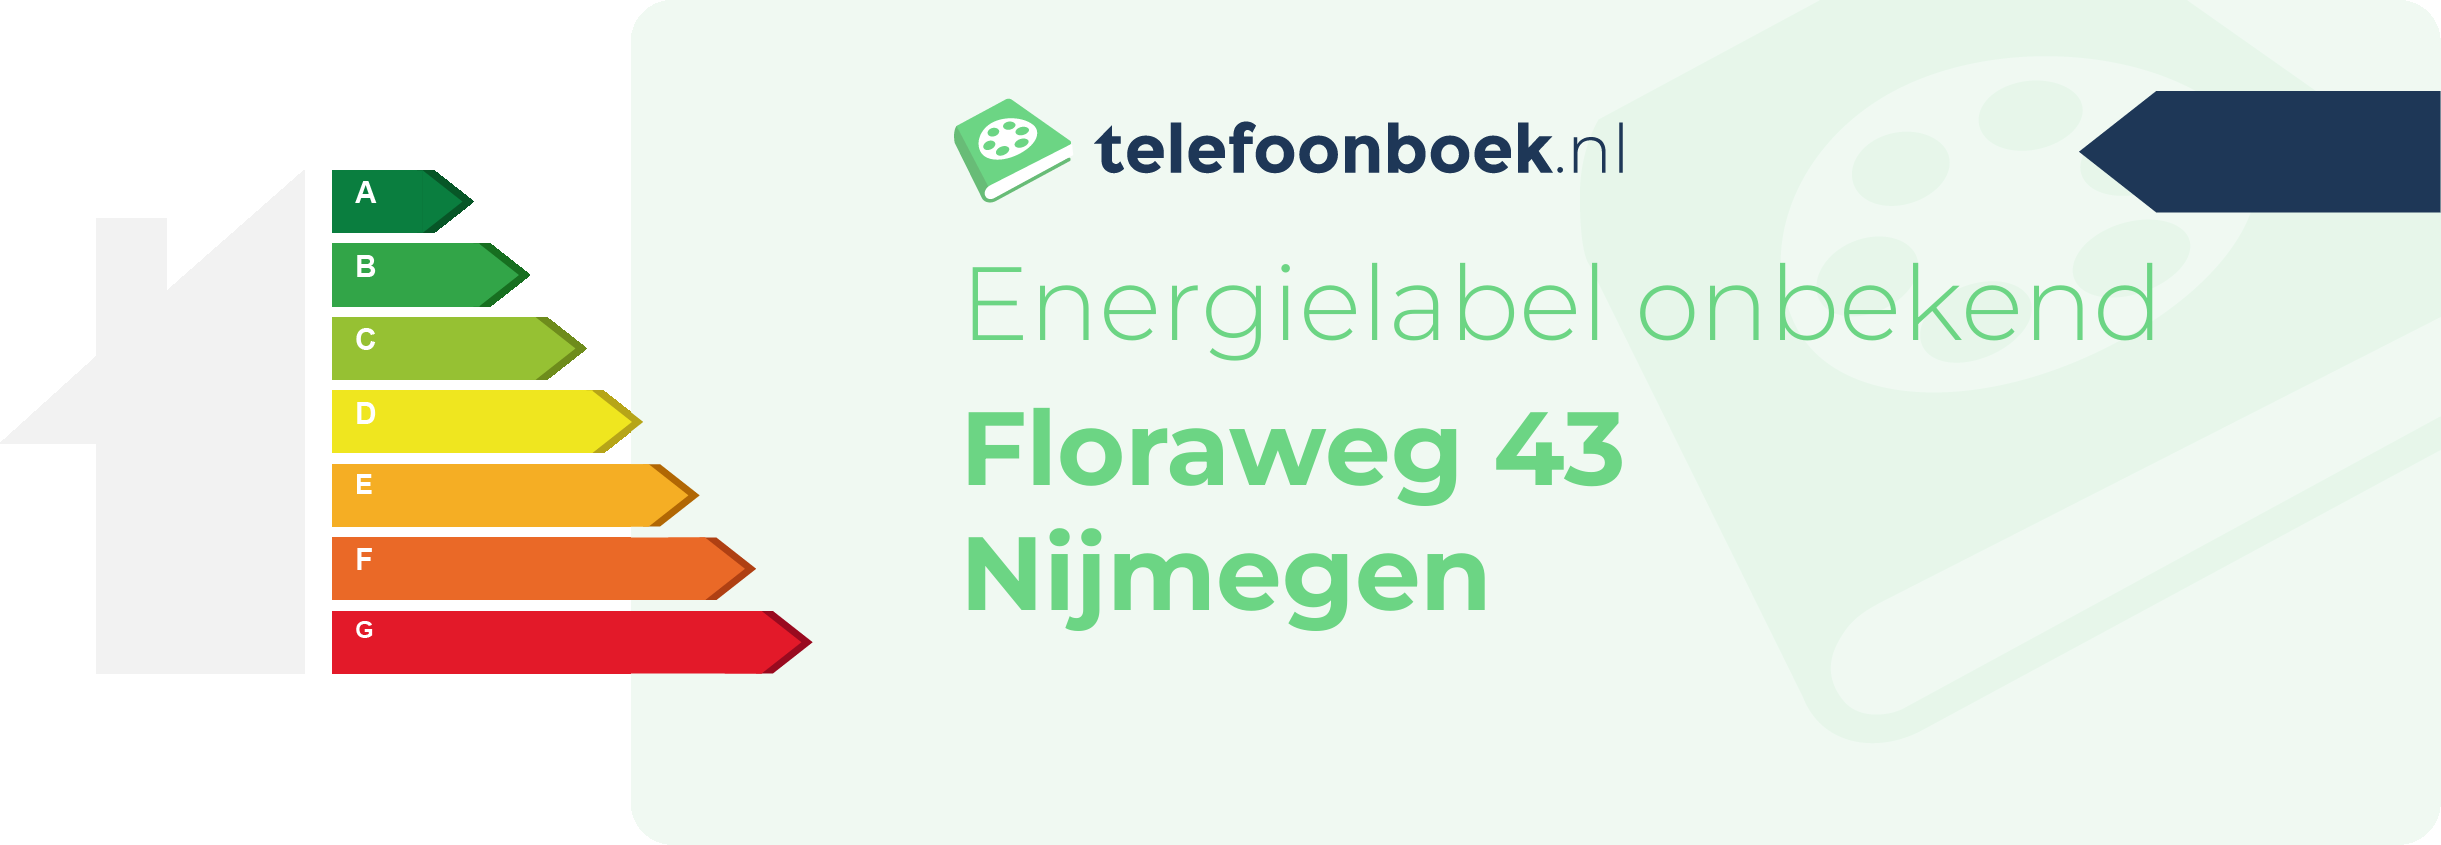 Energielabel Floraweg 43 Nijmegen